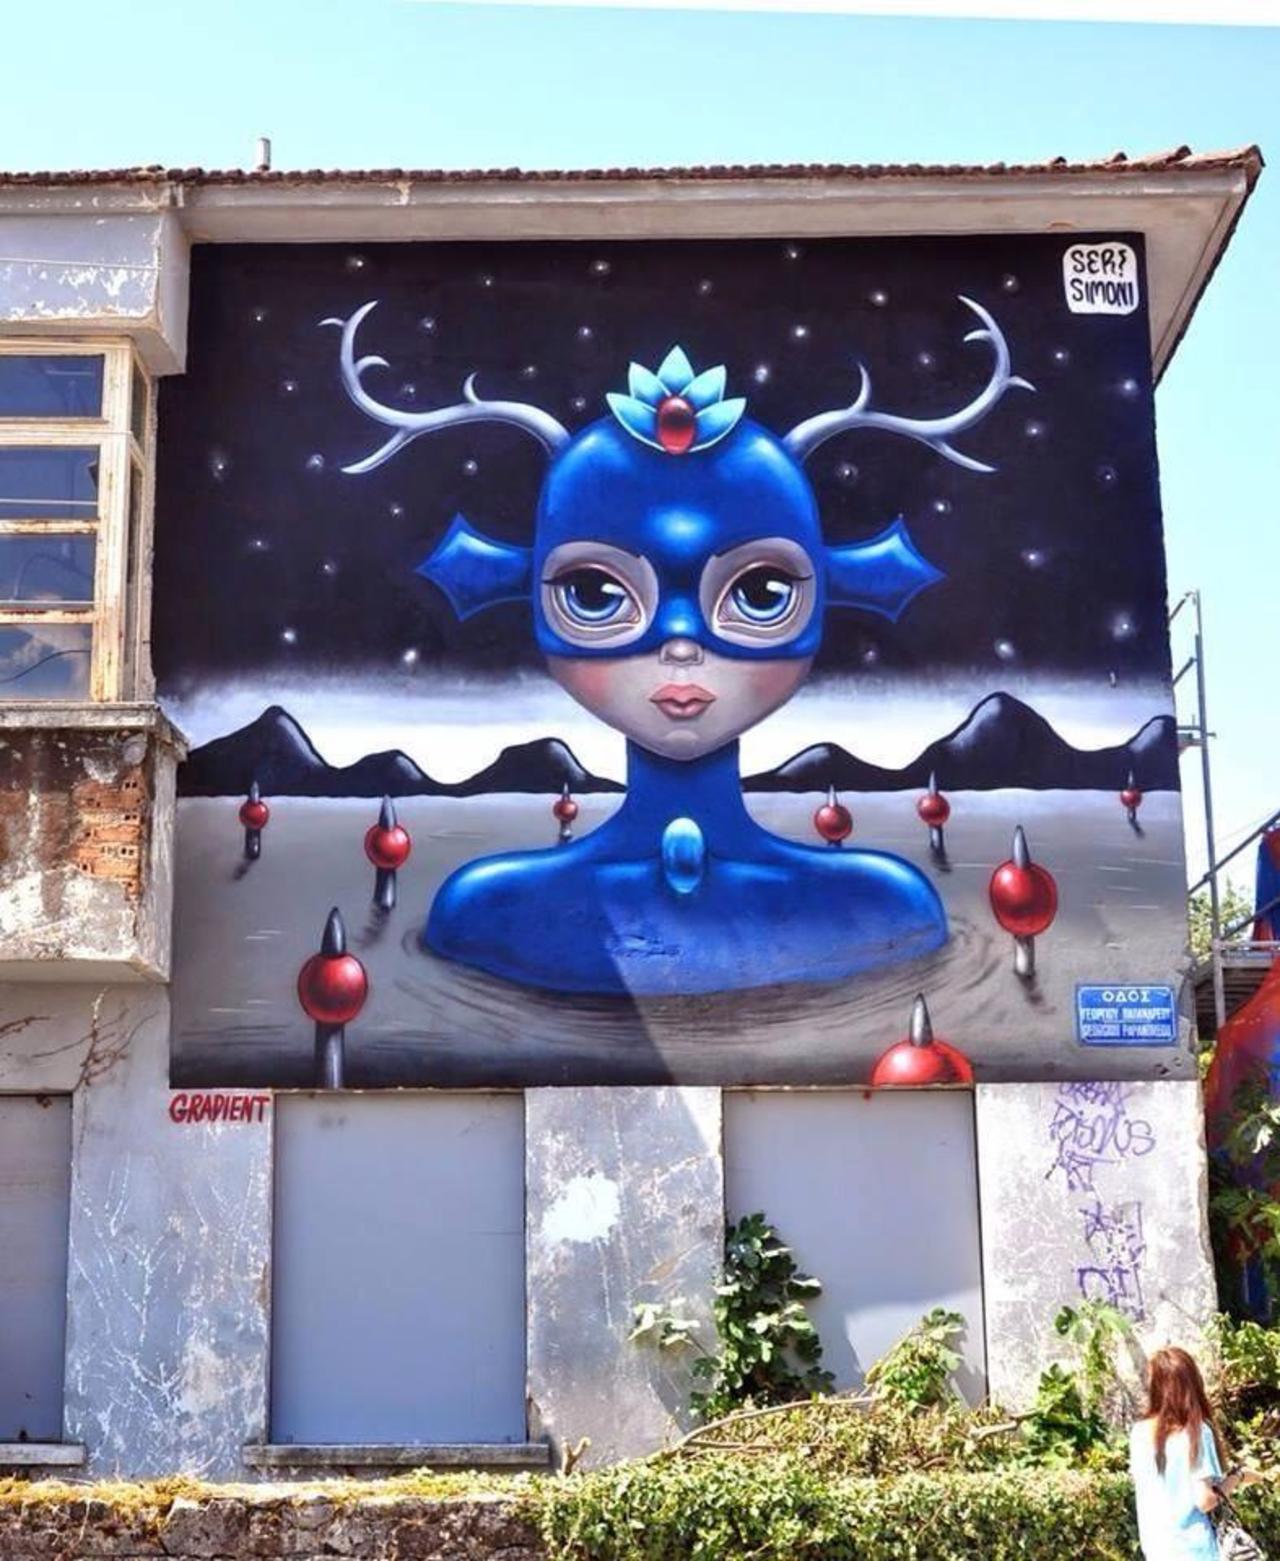 Simoni Fontana & Argiris Ser new unique Street Art mural in Loannina, Greece #art #mural #graffiti #streetart http://t.co/7o56KAHmiT